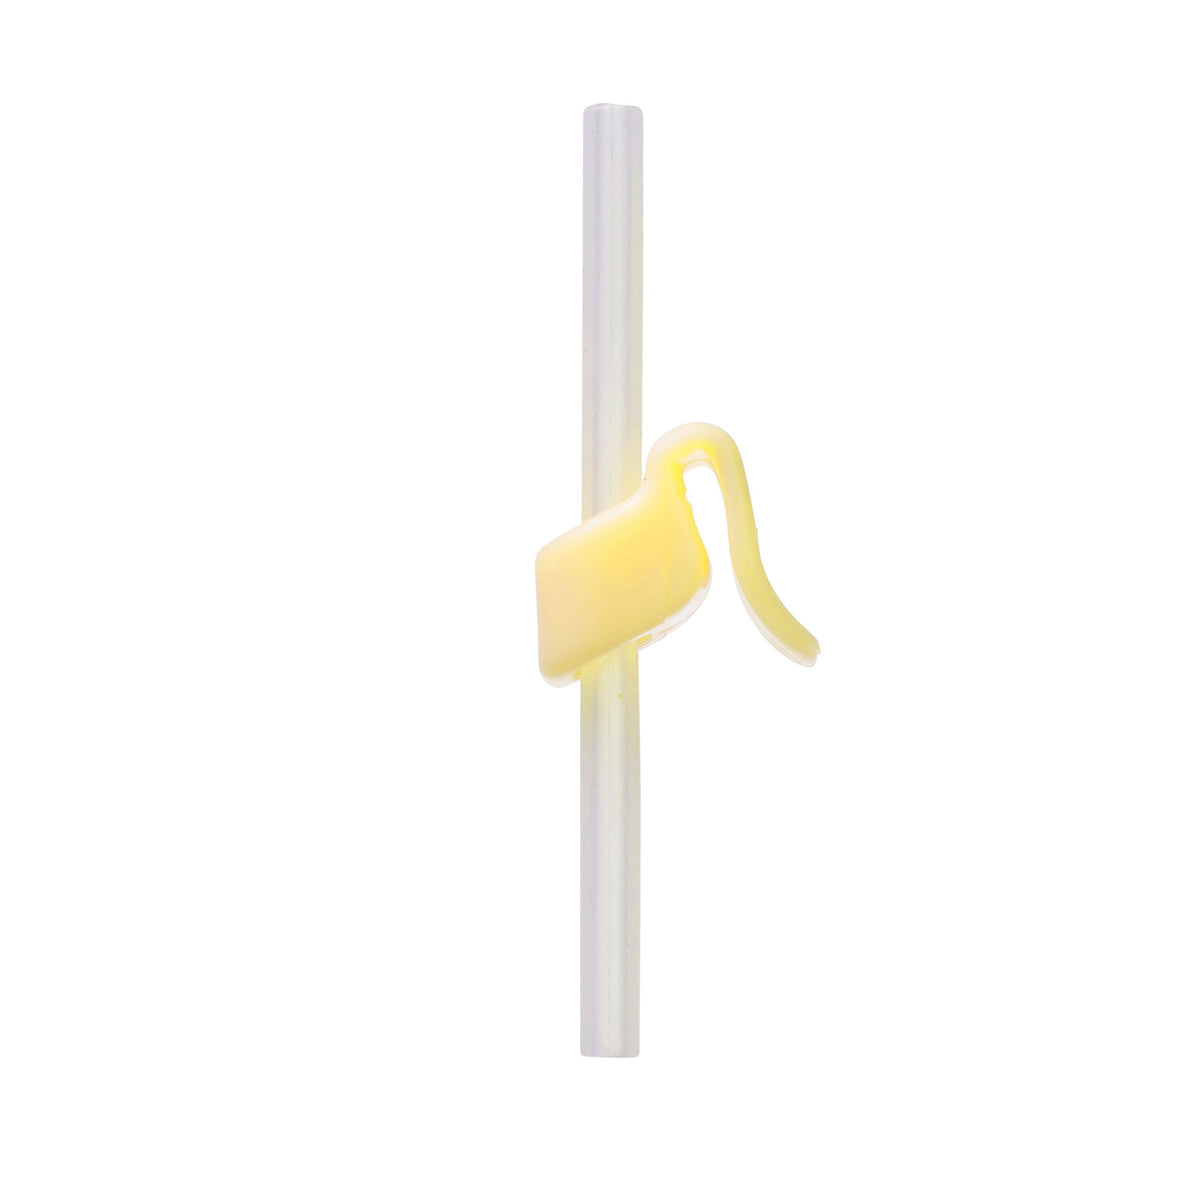 b.box 3 in 1 Bowl and Straw - Gelato Yellow - Banana Split